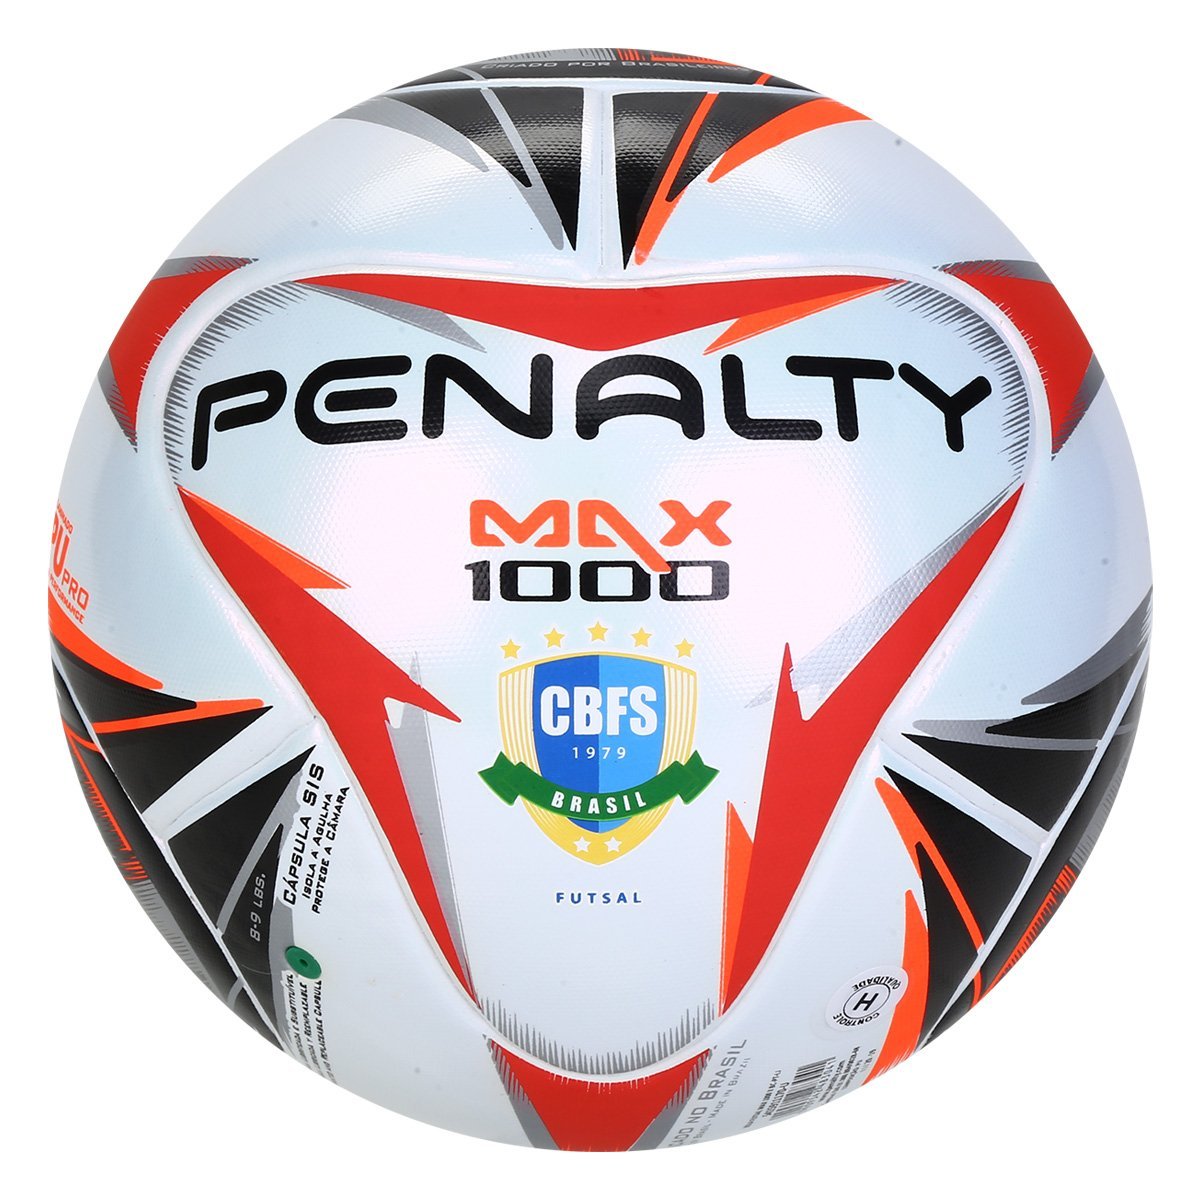 Bola de Futsal Penalty Max 1000 X;Cor: Branco+Preto;Tamanho:Único;Gênero:Unissex;